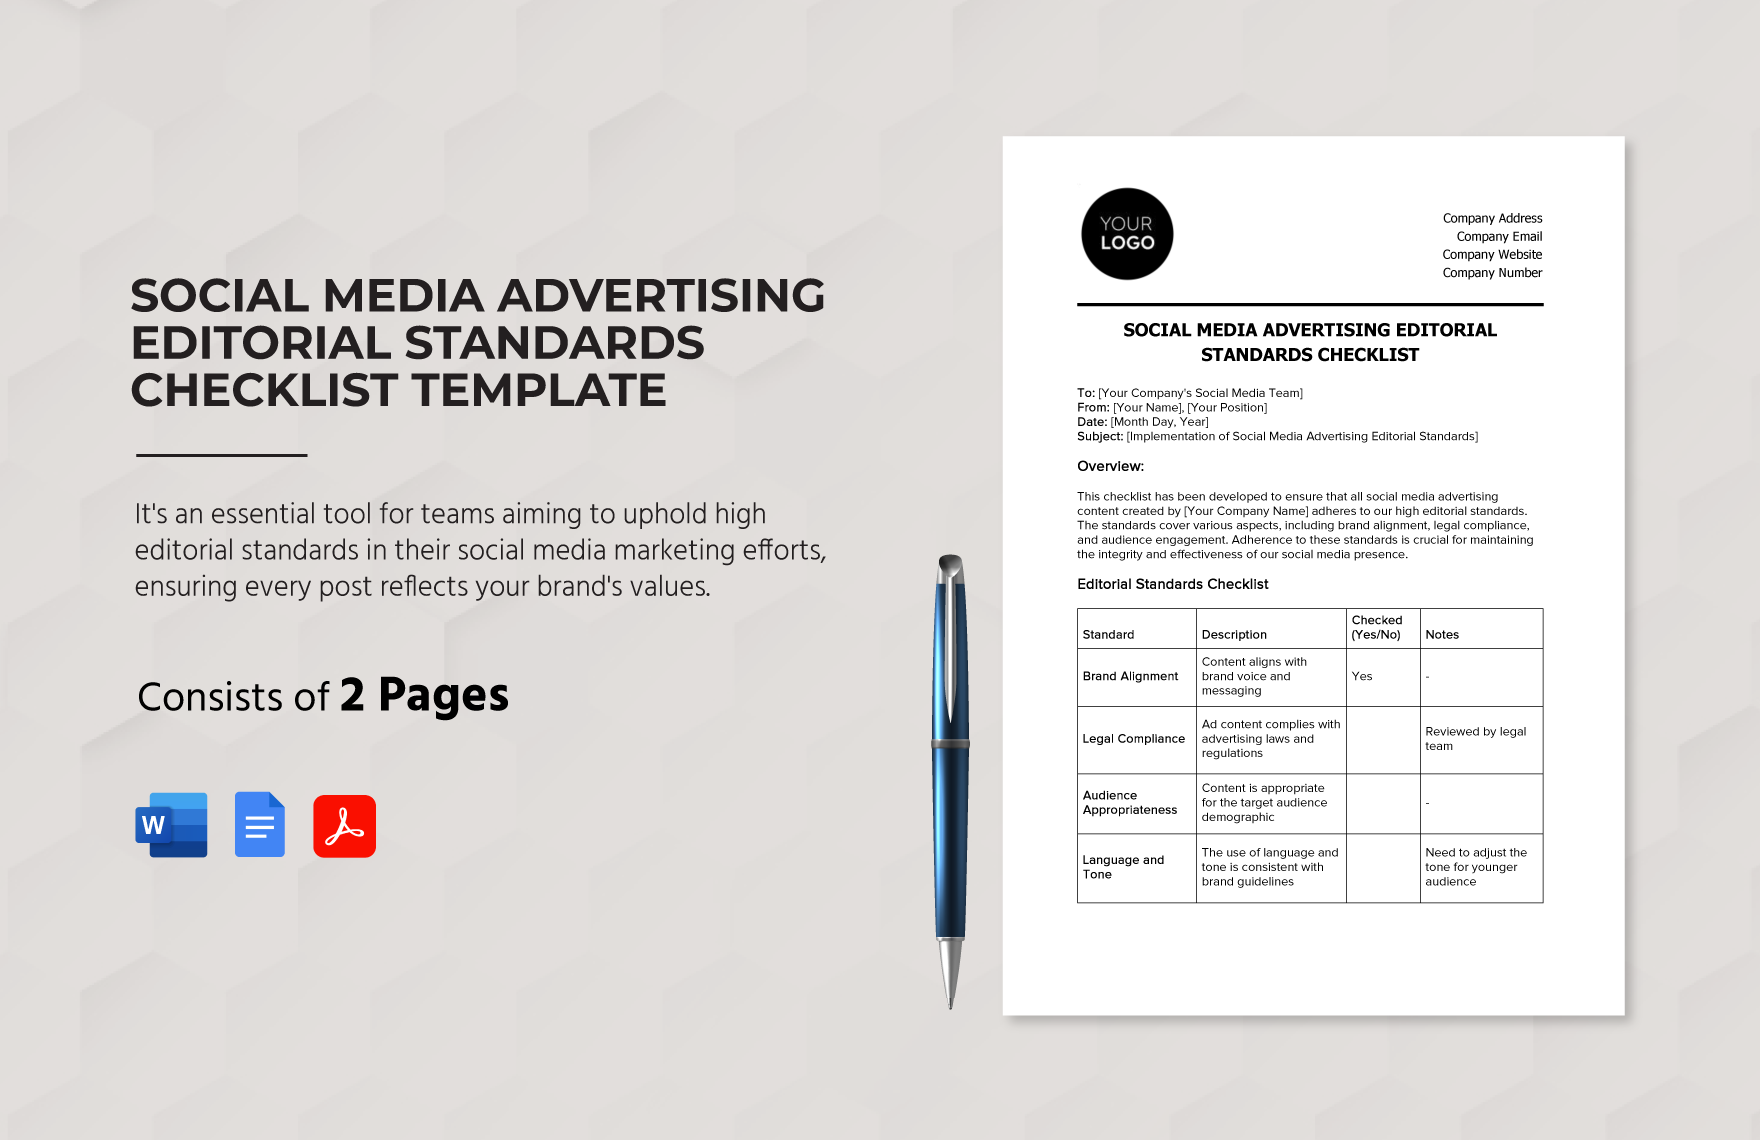 Social Media Advertising Editorial Standards Checklist Template in Word, Google Docs, PDF